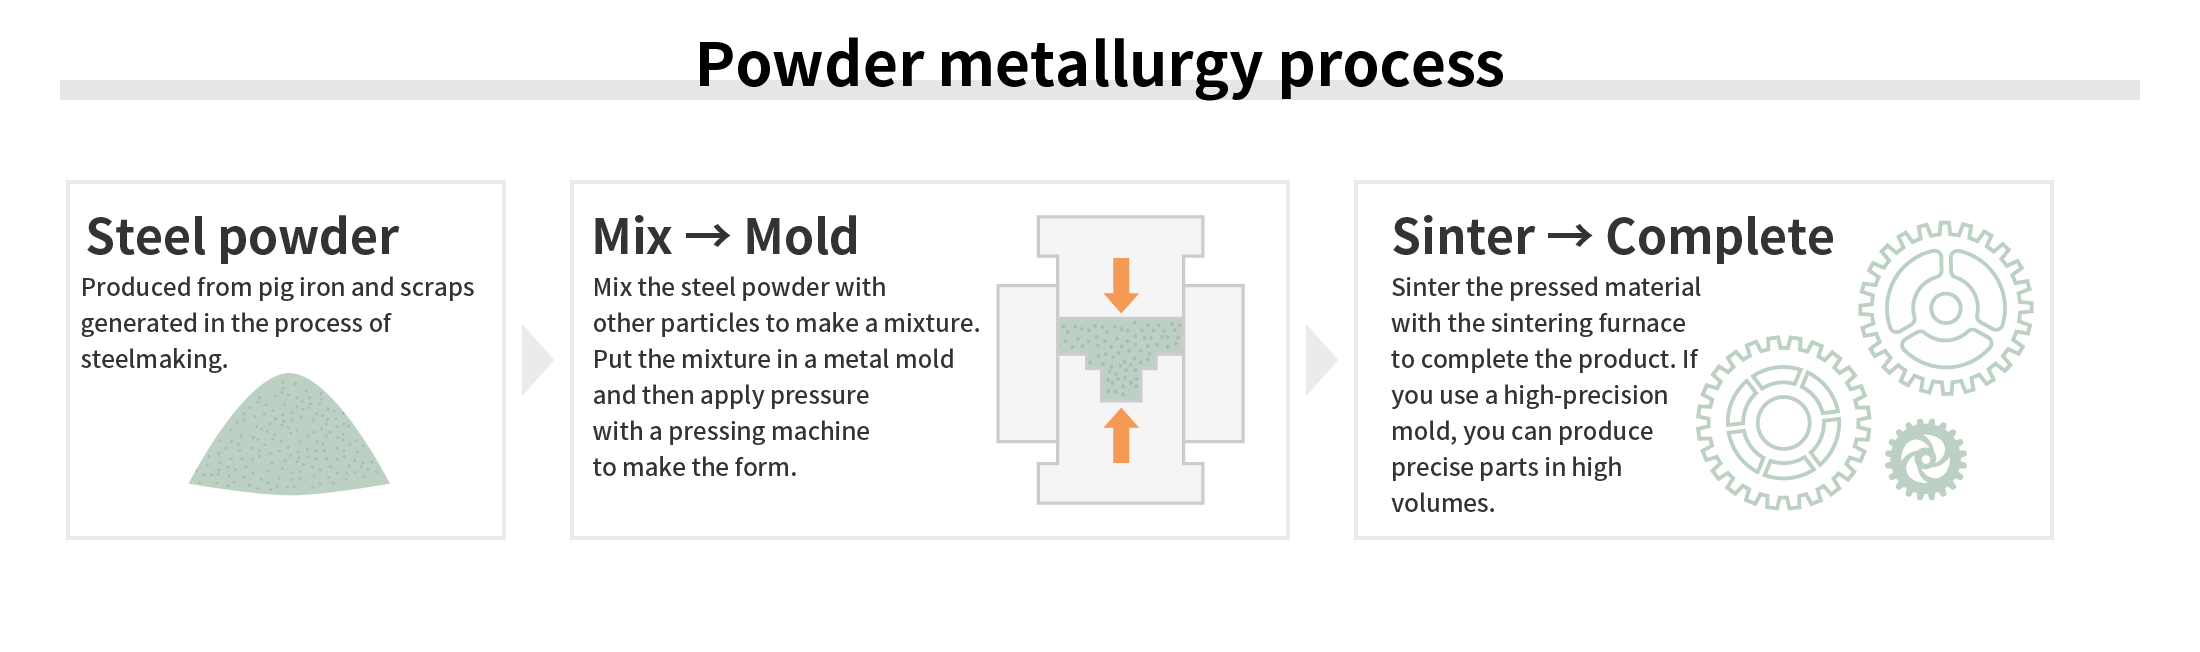 Powder metallurgy process